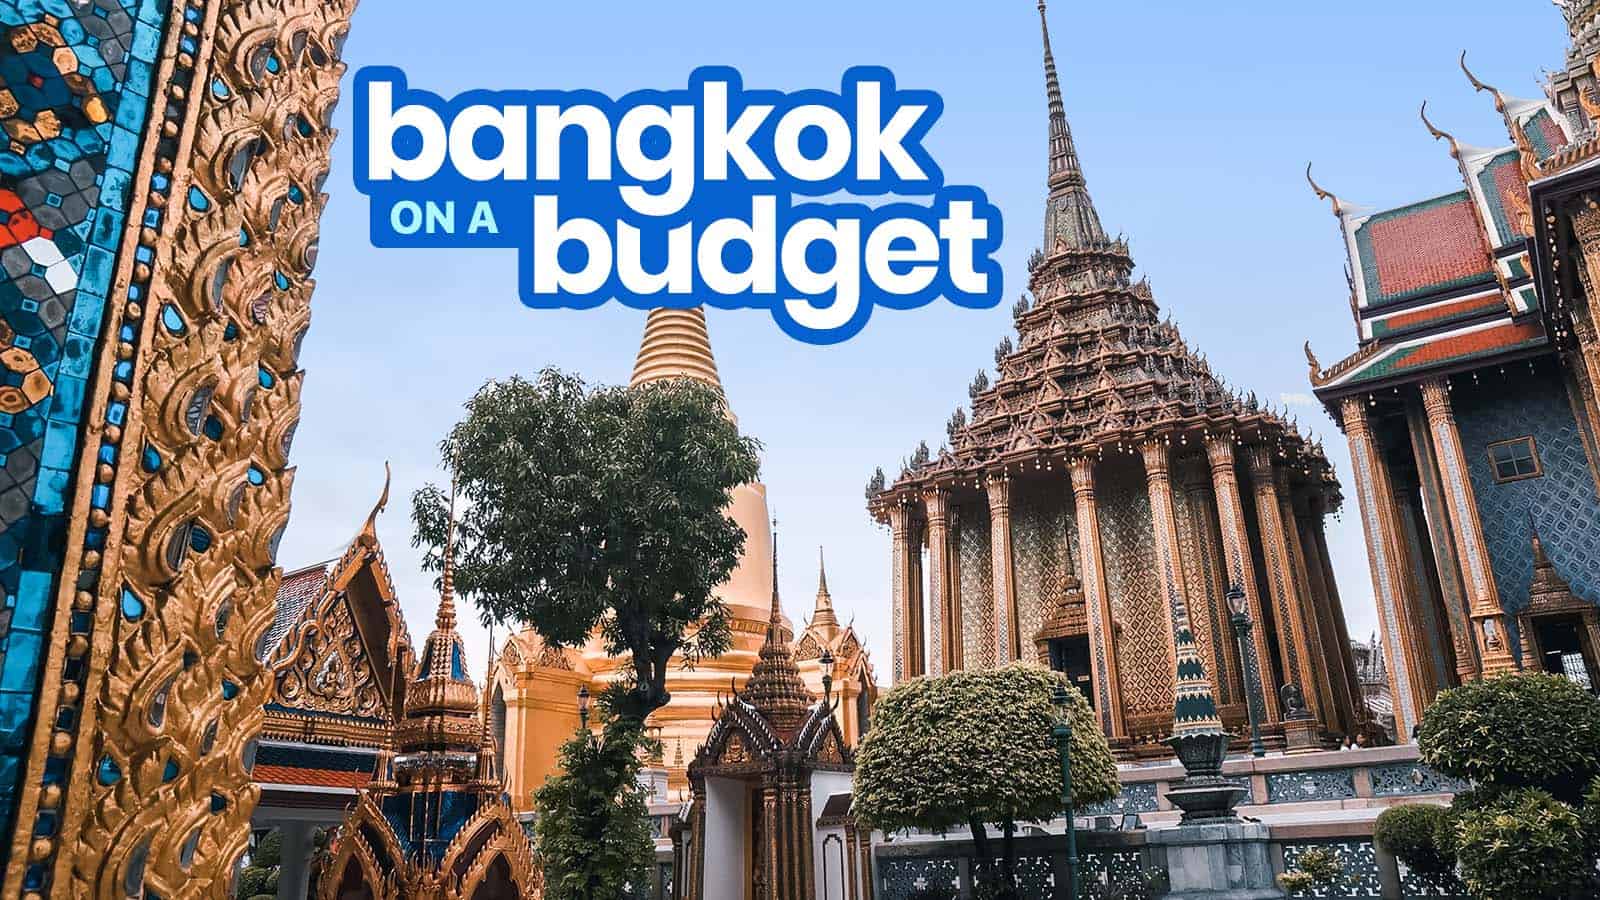 BANGKOK TRAVEL GUIDE with Budget Itinerary